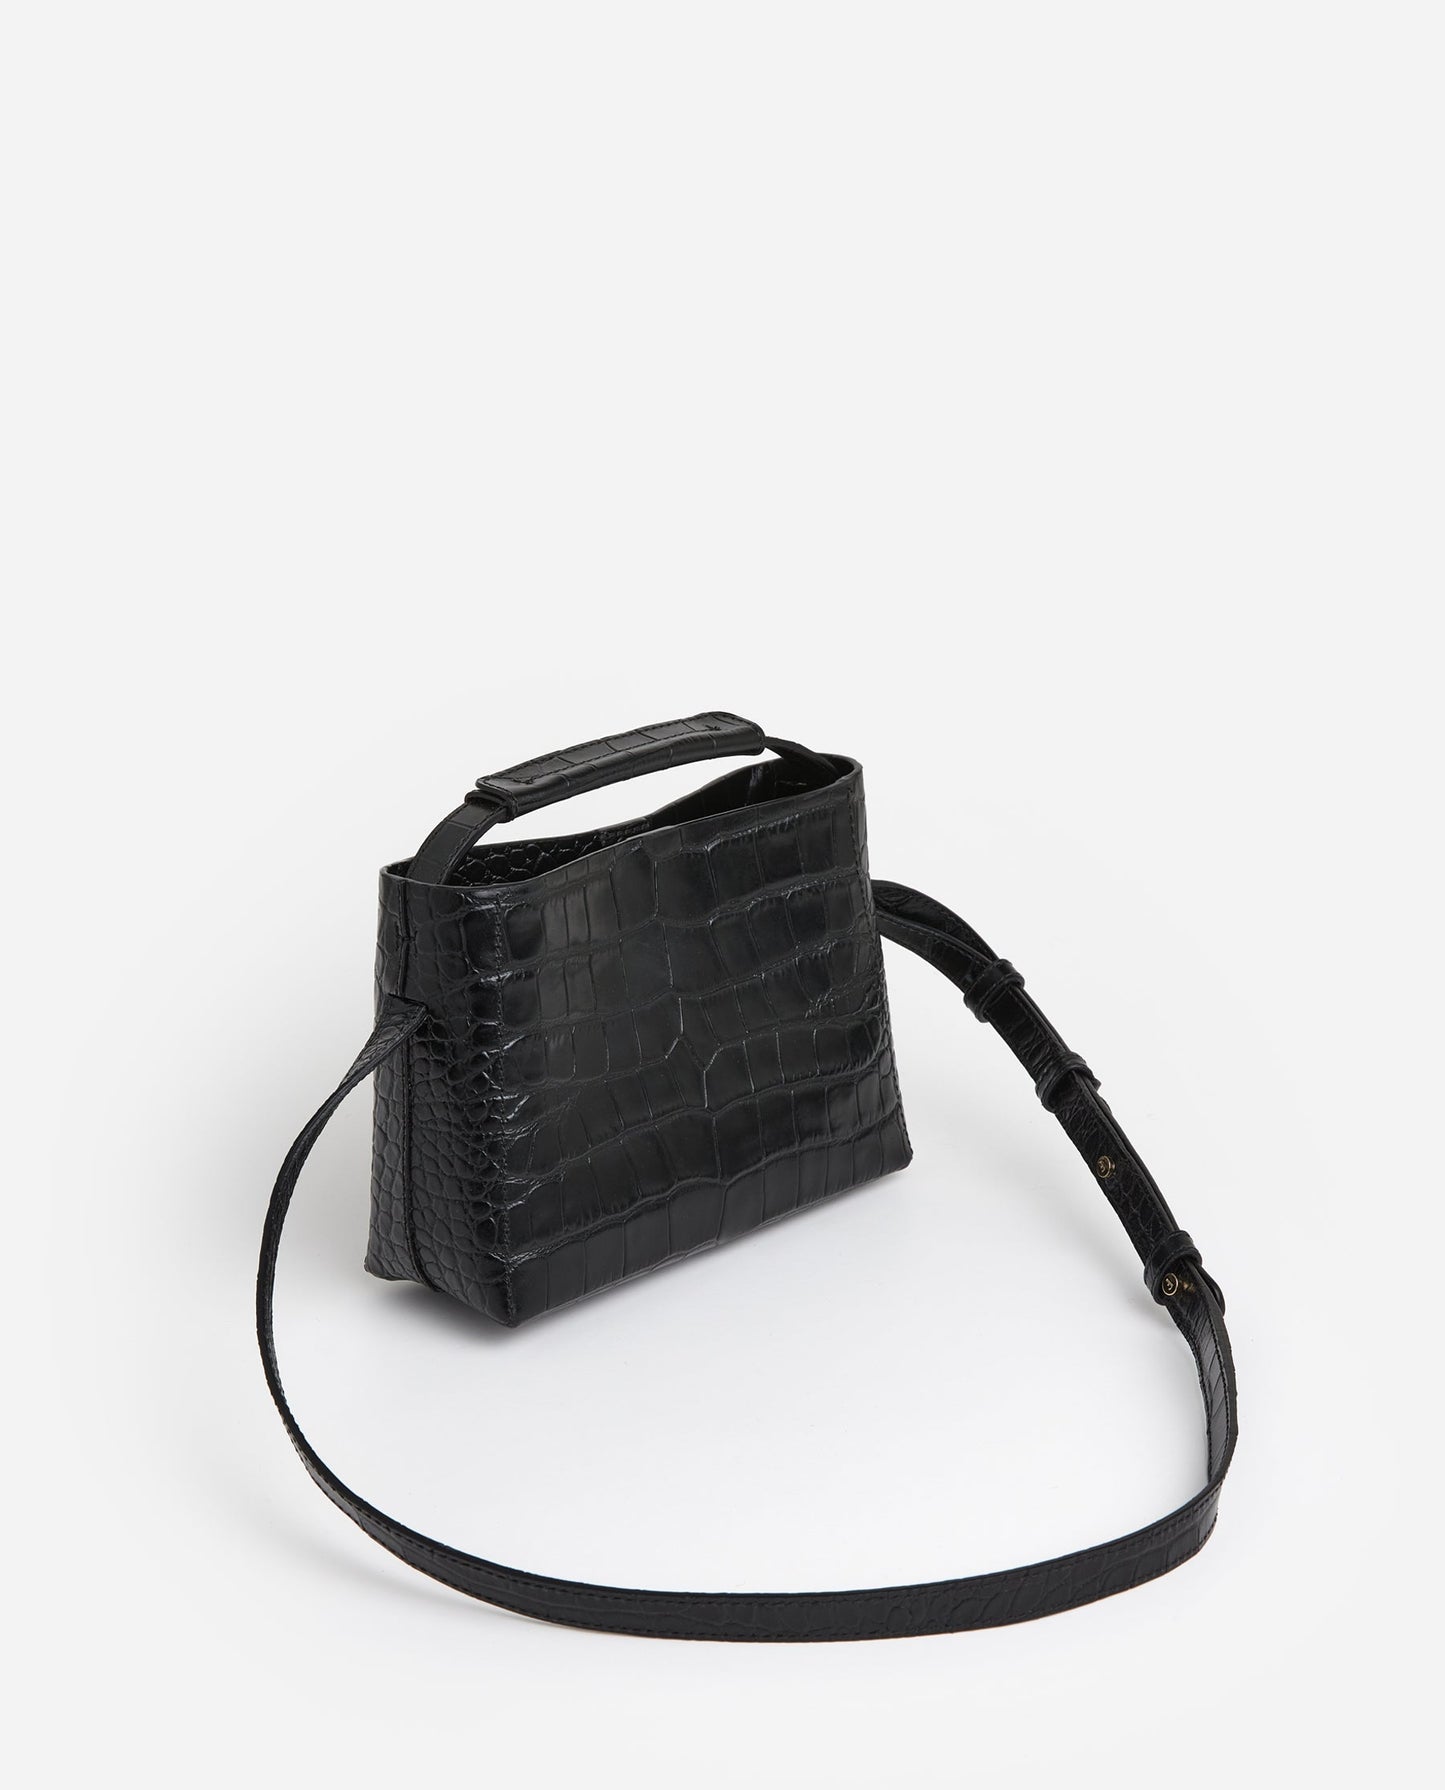 Hedda Mini Handbag Leather Black Croco